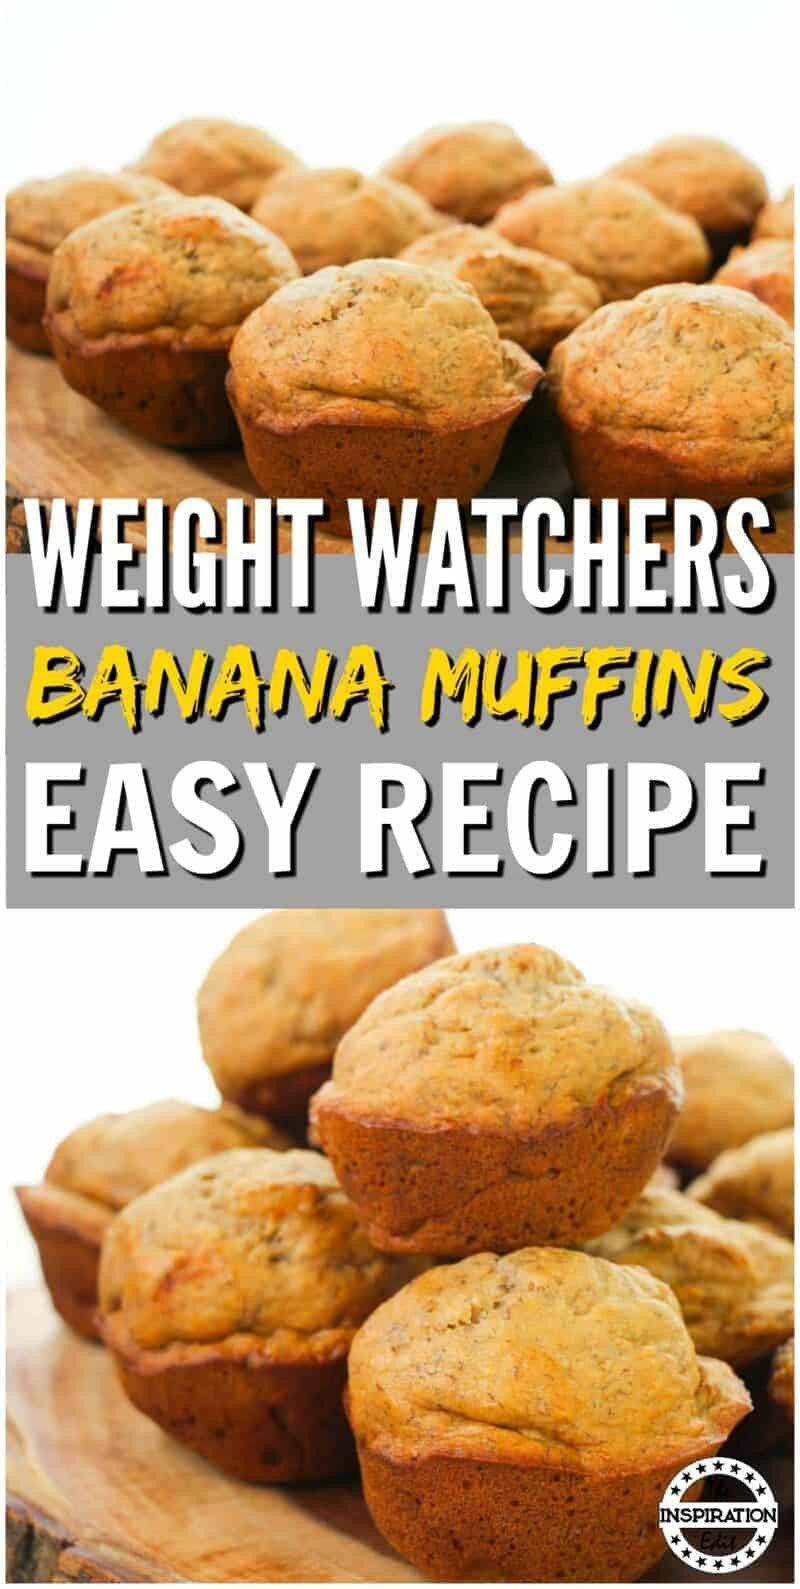 Weight Watchers Banana Muffin Recipes
 Weight Watchers Banana Muffins Gluten Free · The